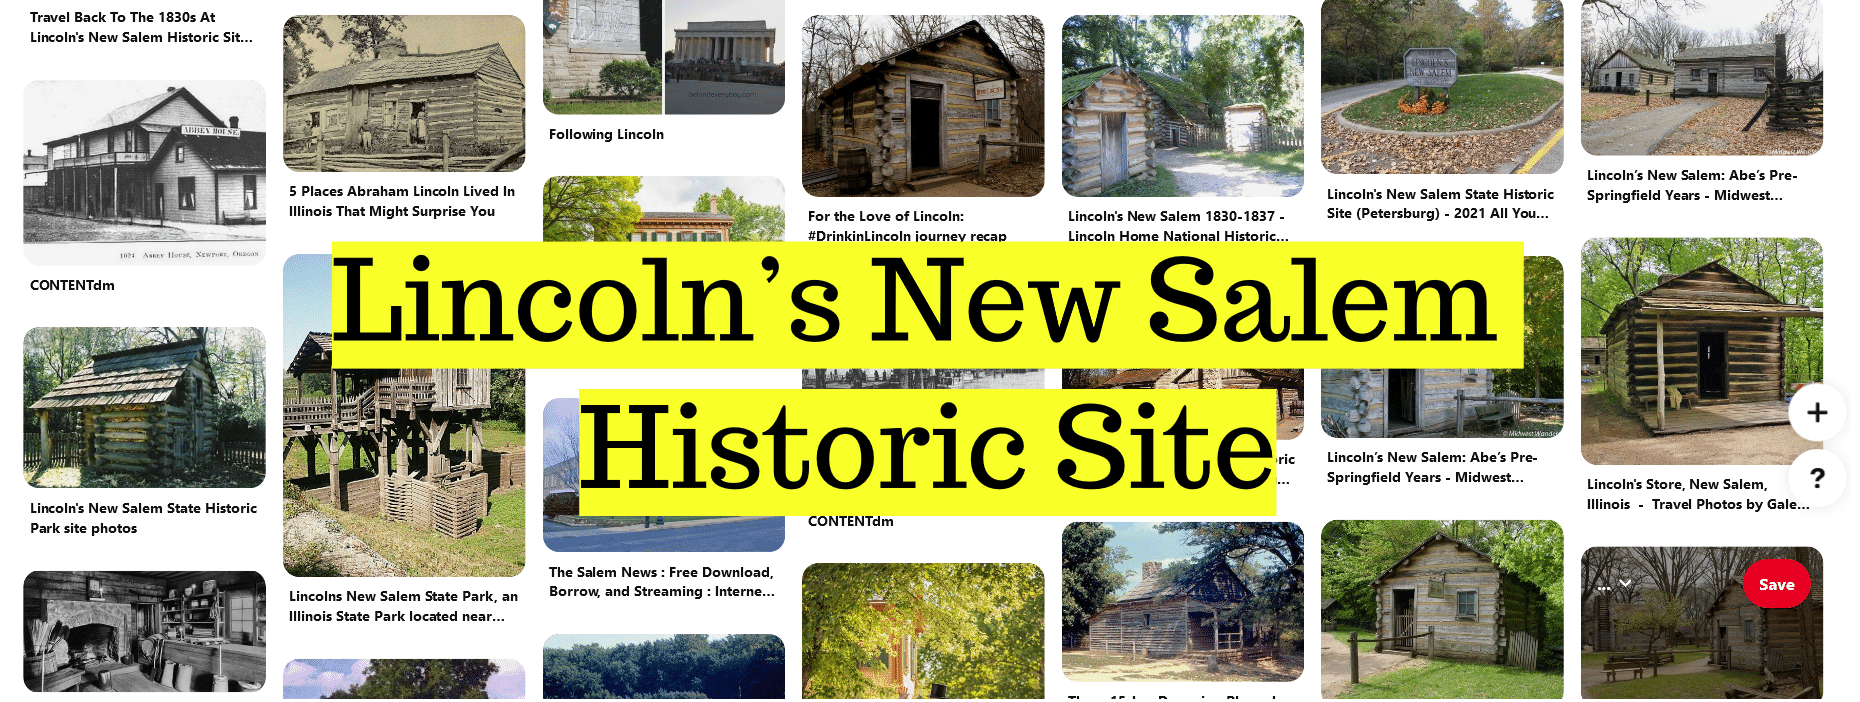 Lincoln’s New Salem Historic Site